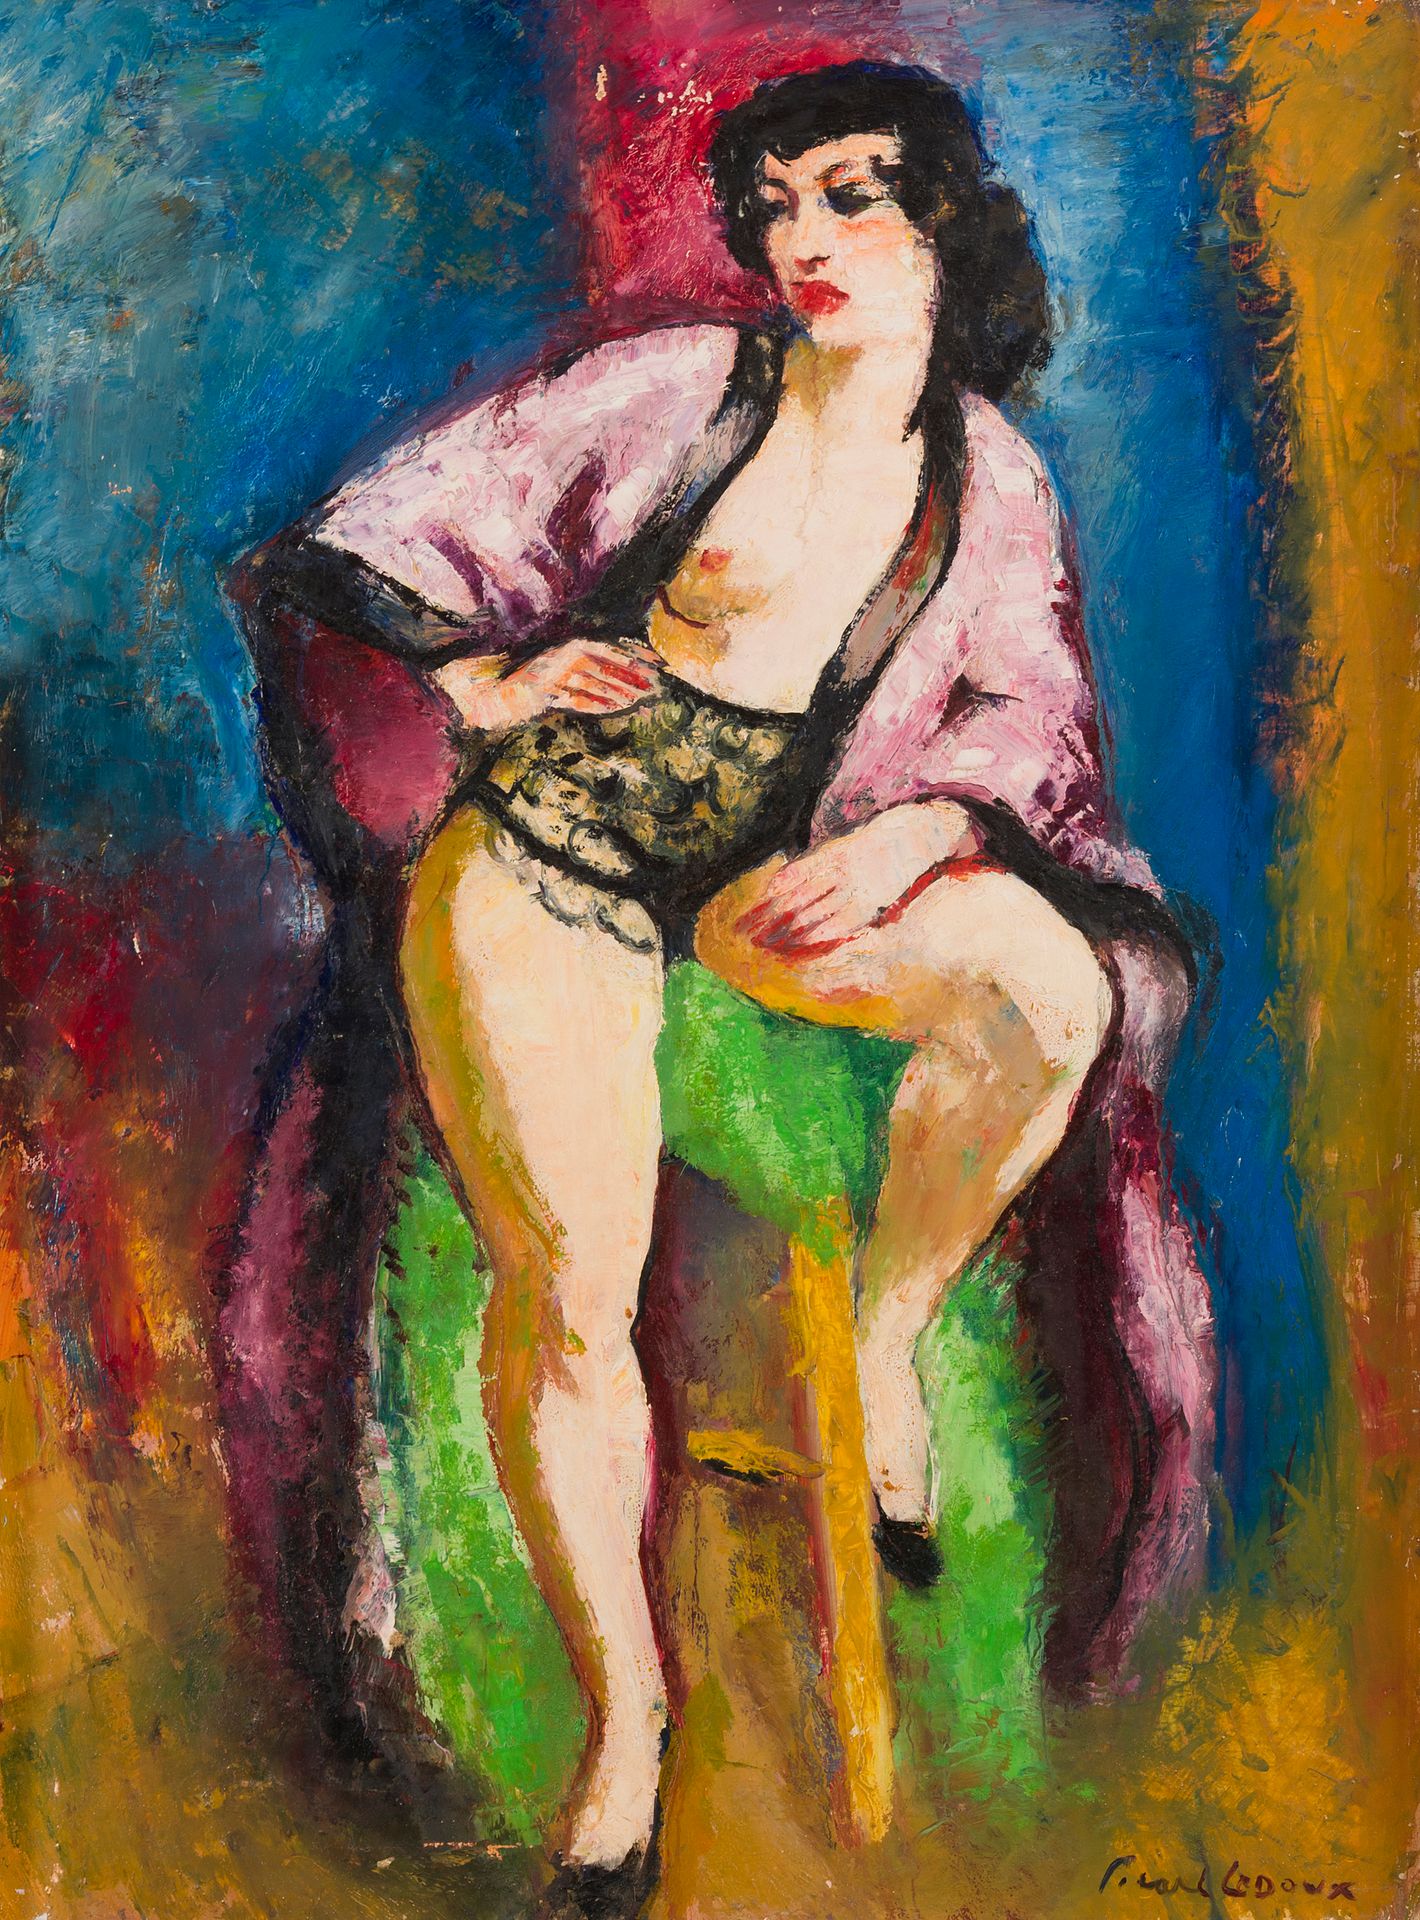 Null 查尔斯-皮卡特-勒杜 (1881-1959)
坐在凳子上的裸体，1950年
右下角有签名的伊索莱尔上的油画
81 x 60厘米
(小块缺失)